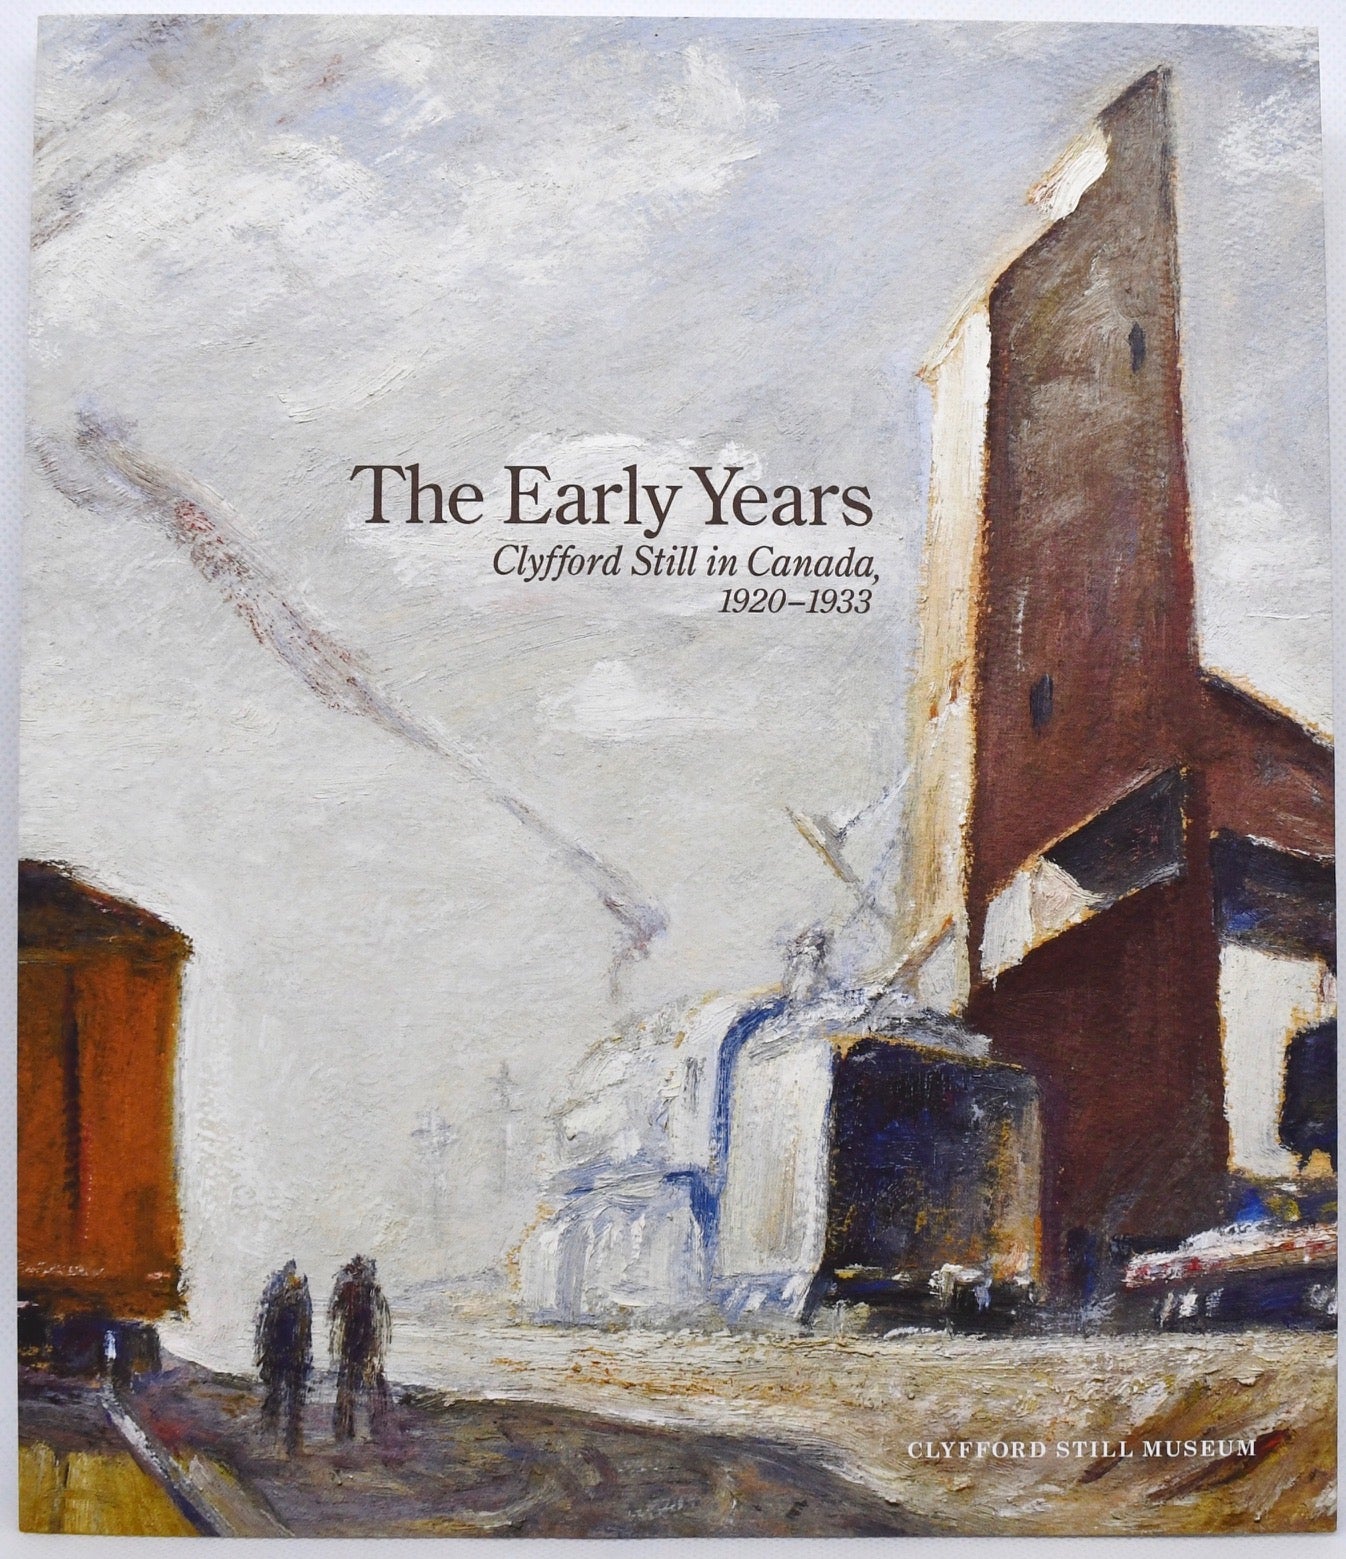 The Early Years: Clyfford Still in Canada, 1920-1933